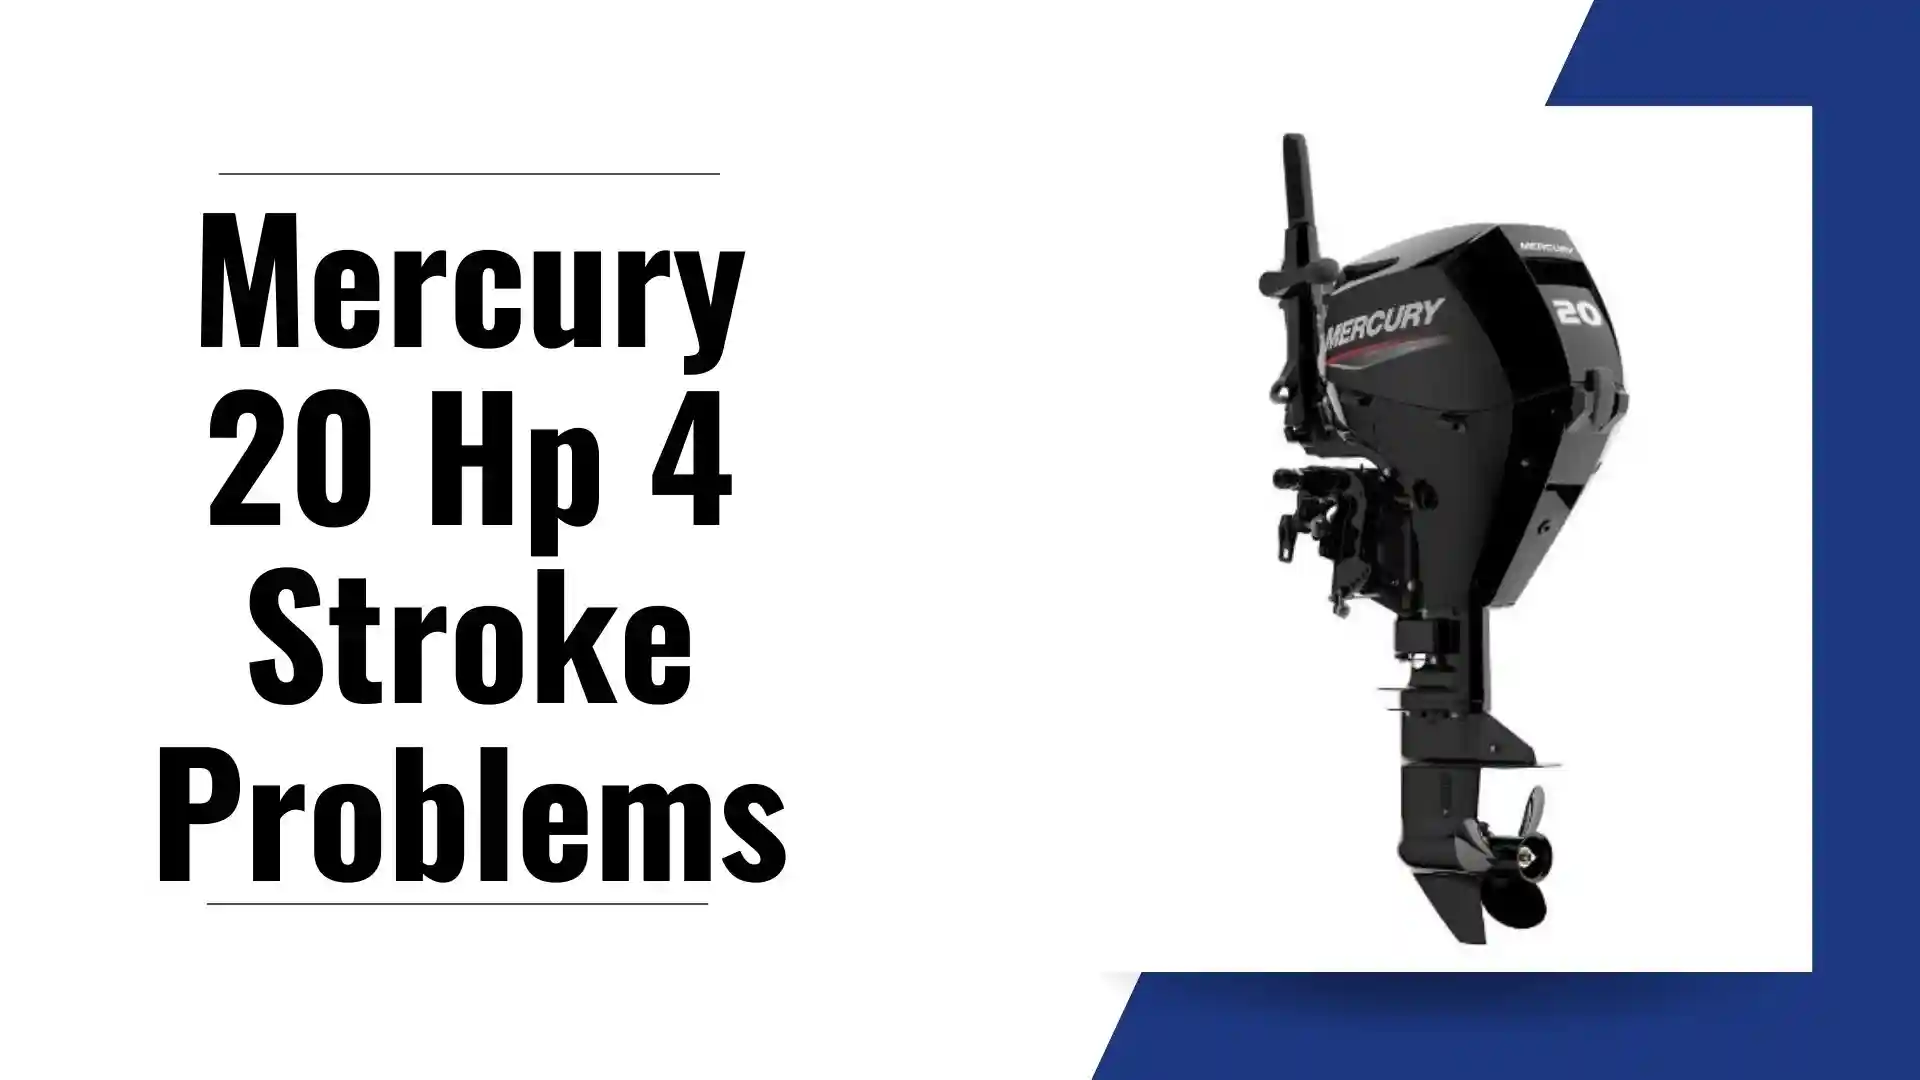 mercury 20 hp 4 stroke problems